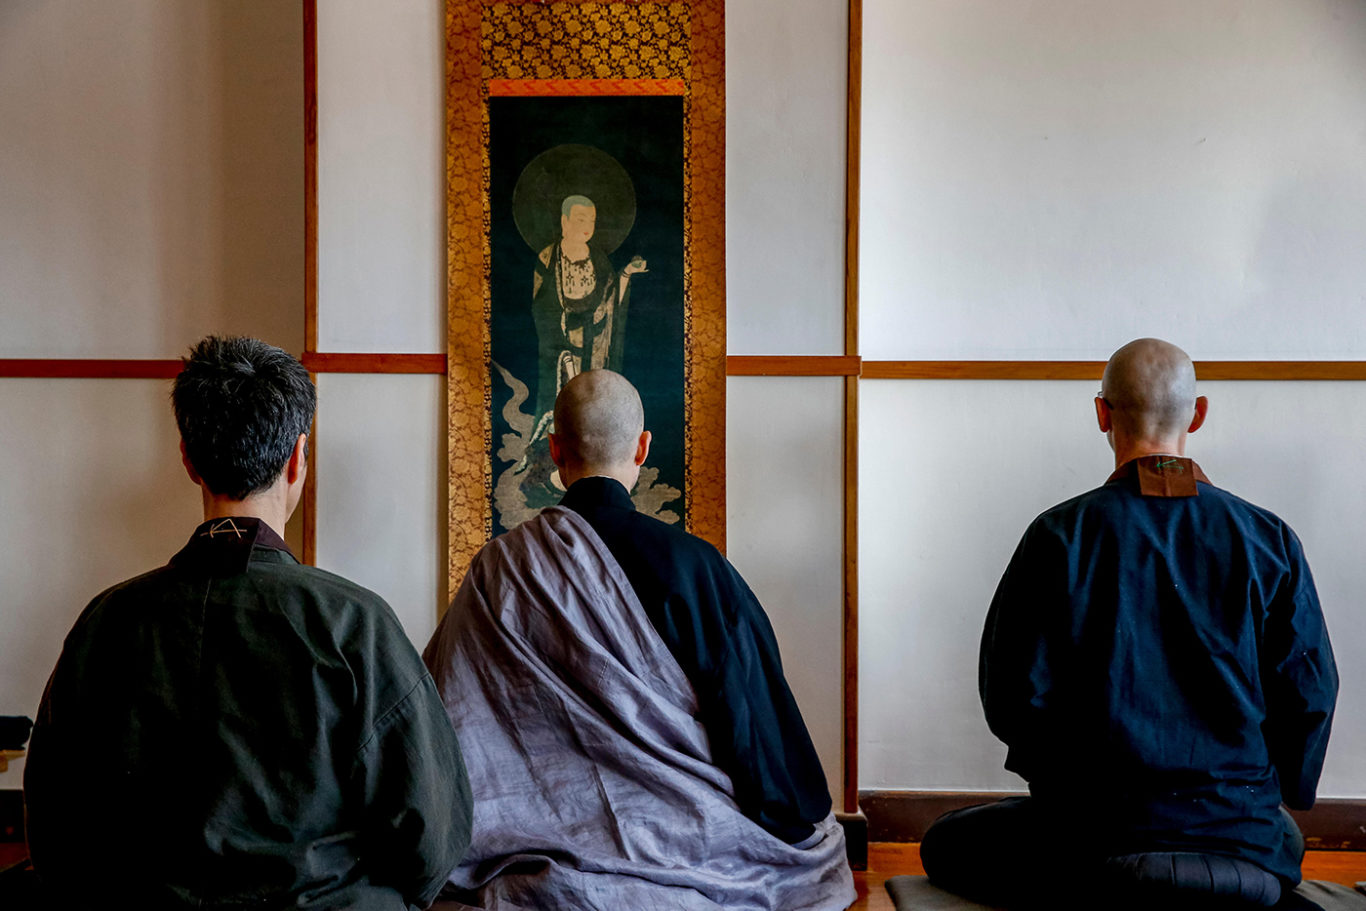 zen buddhists practice sitting zazen